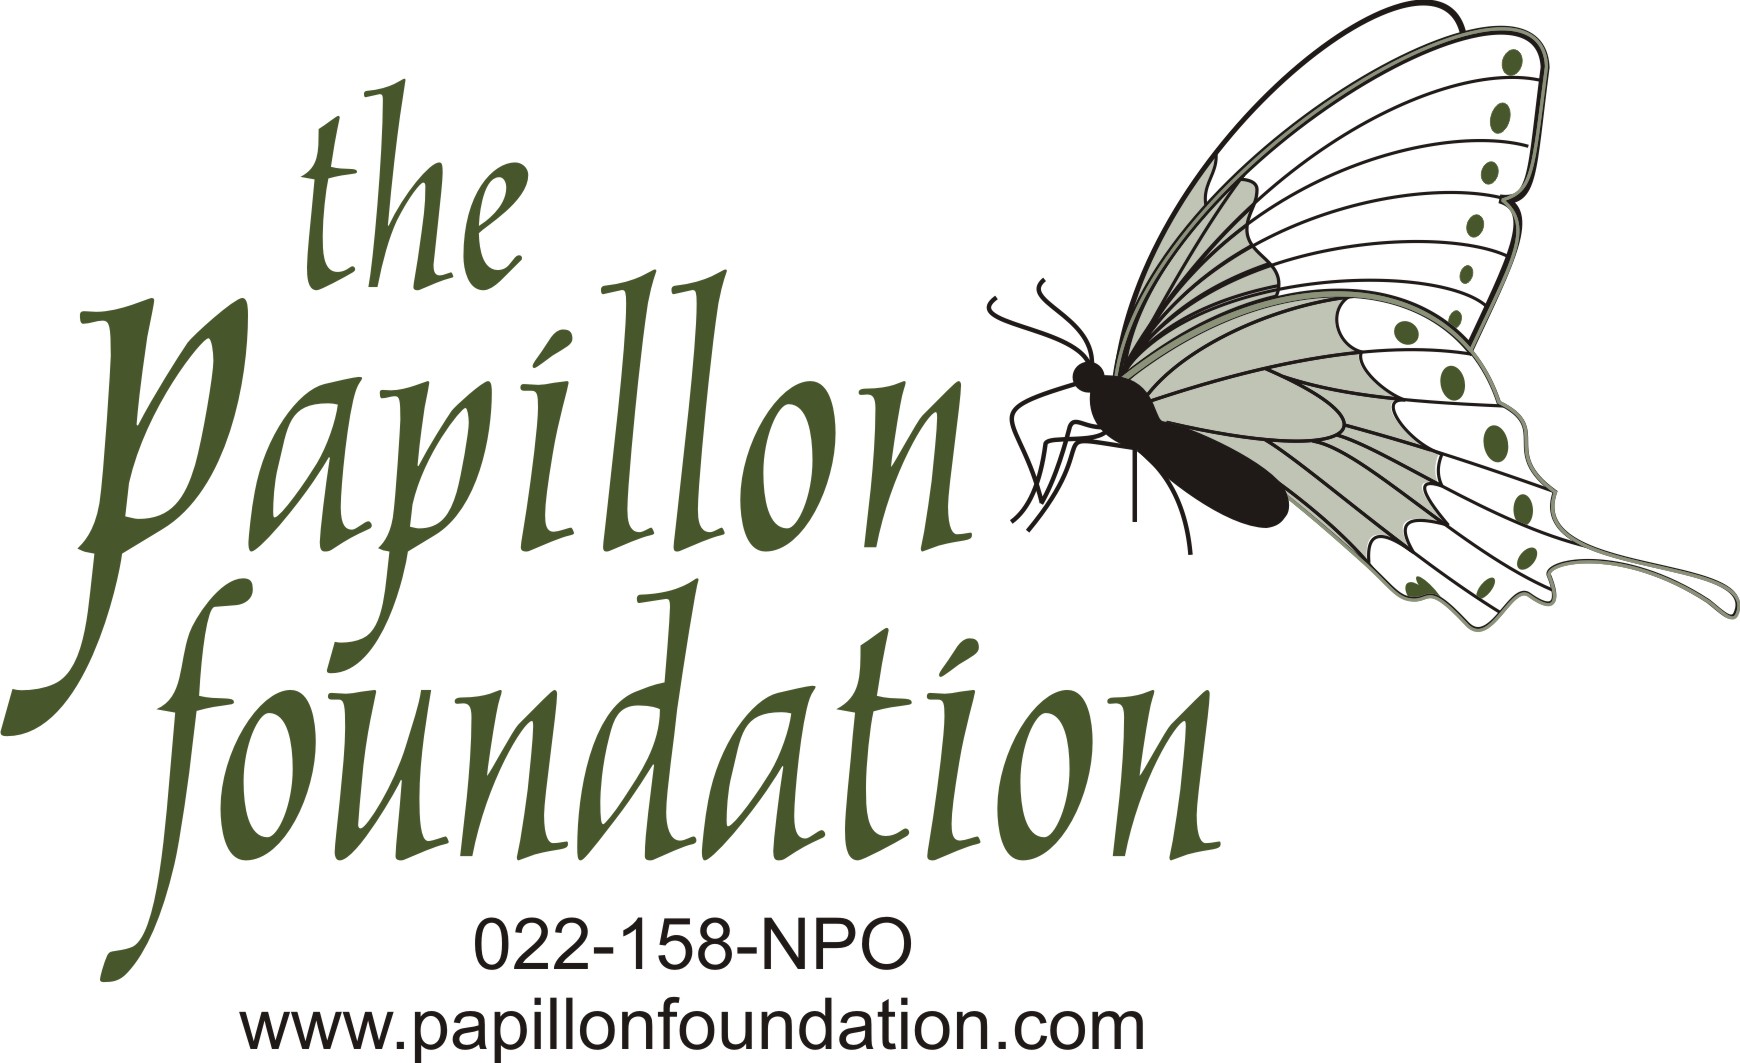 The Papillon Foundation